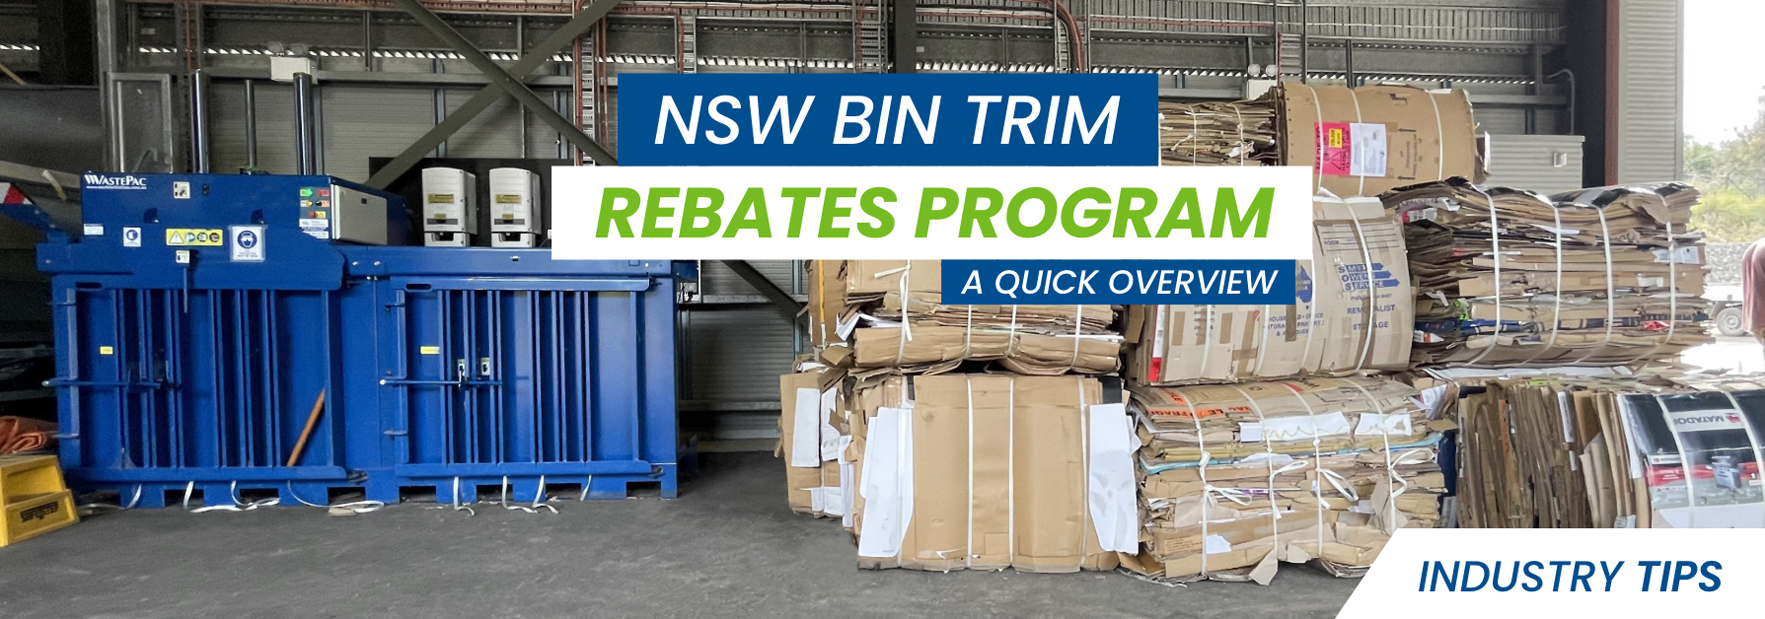 NSW Bin Trim Rebates